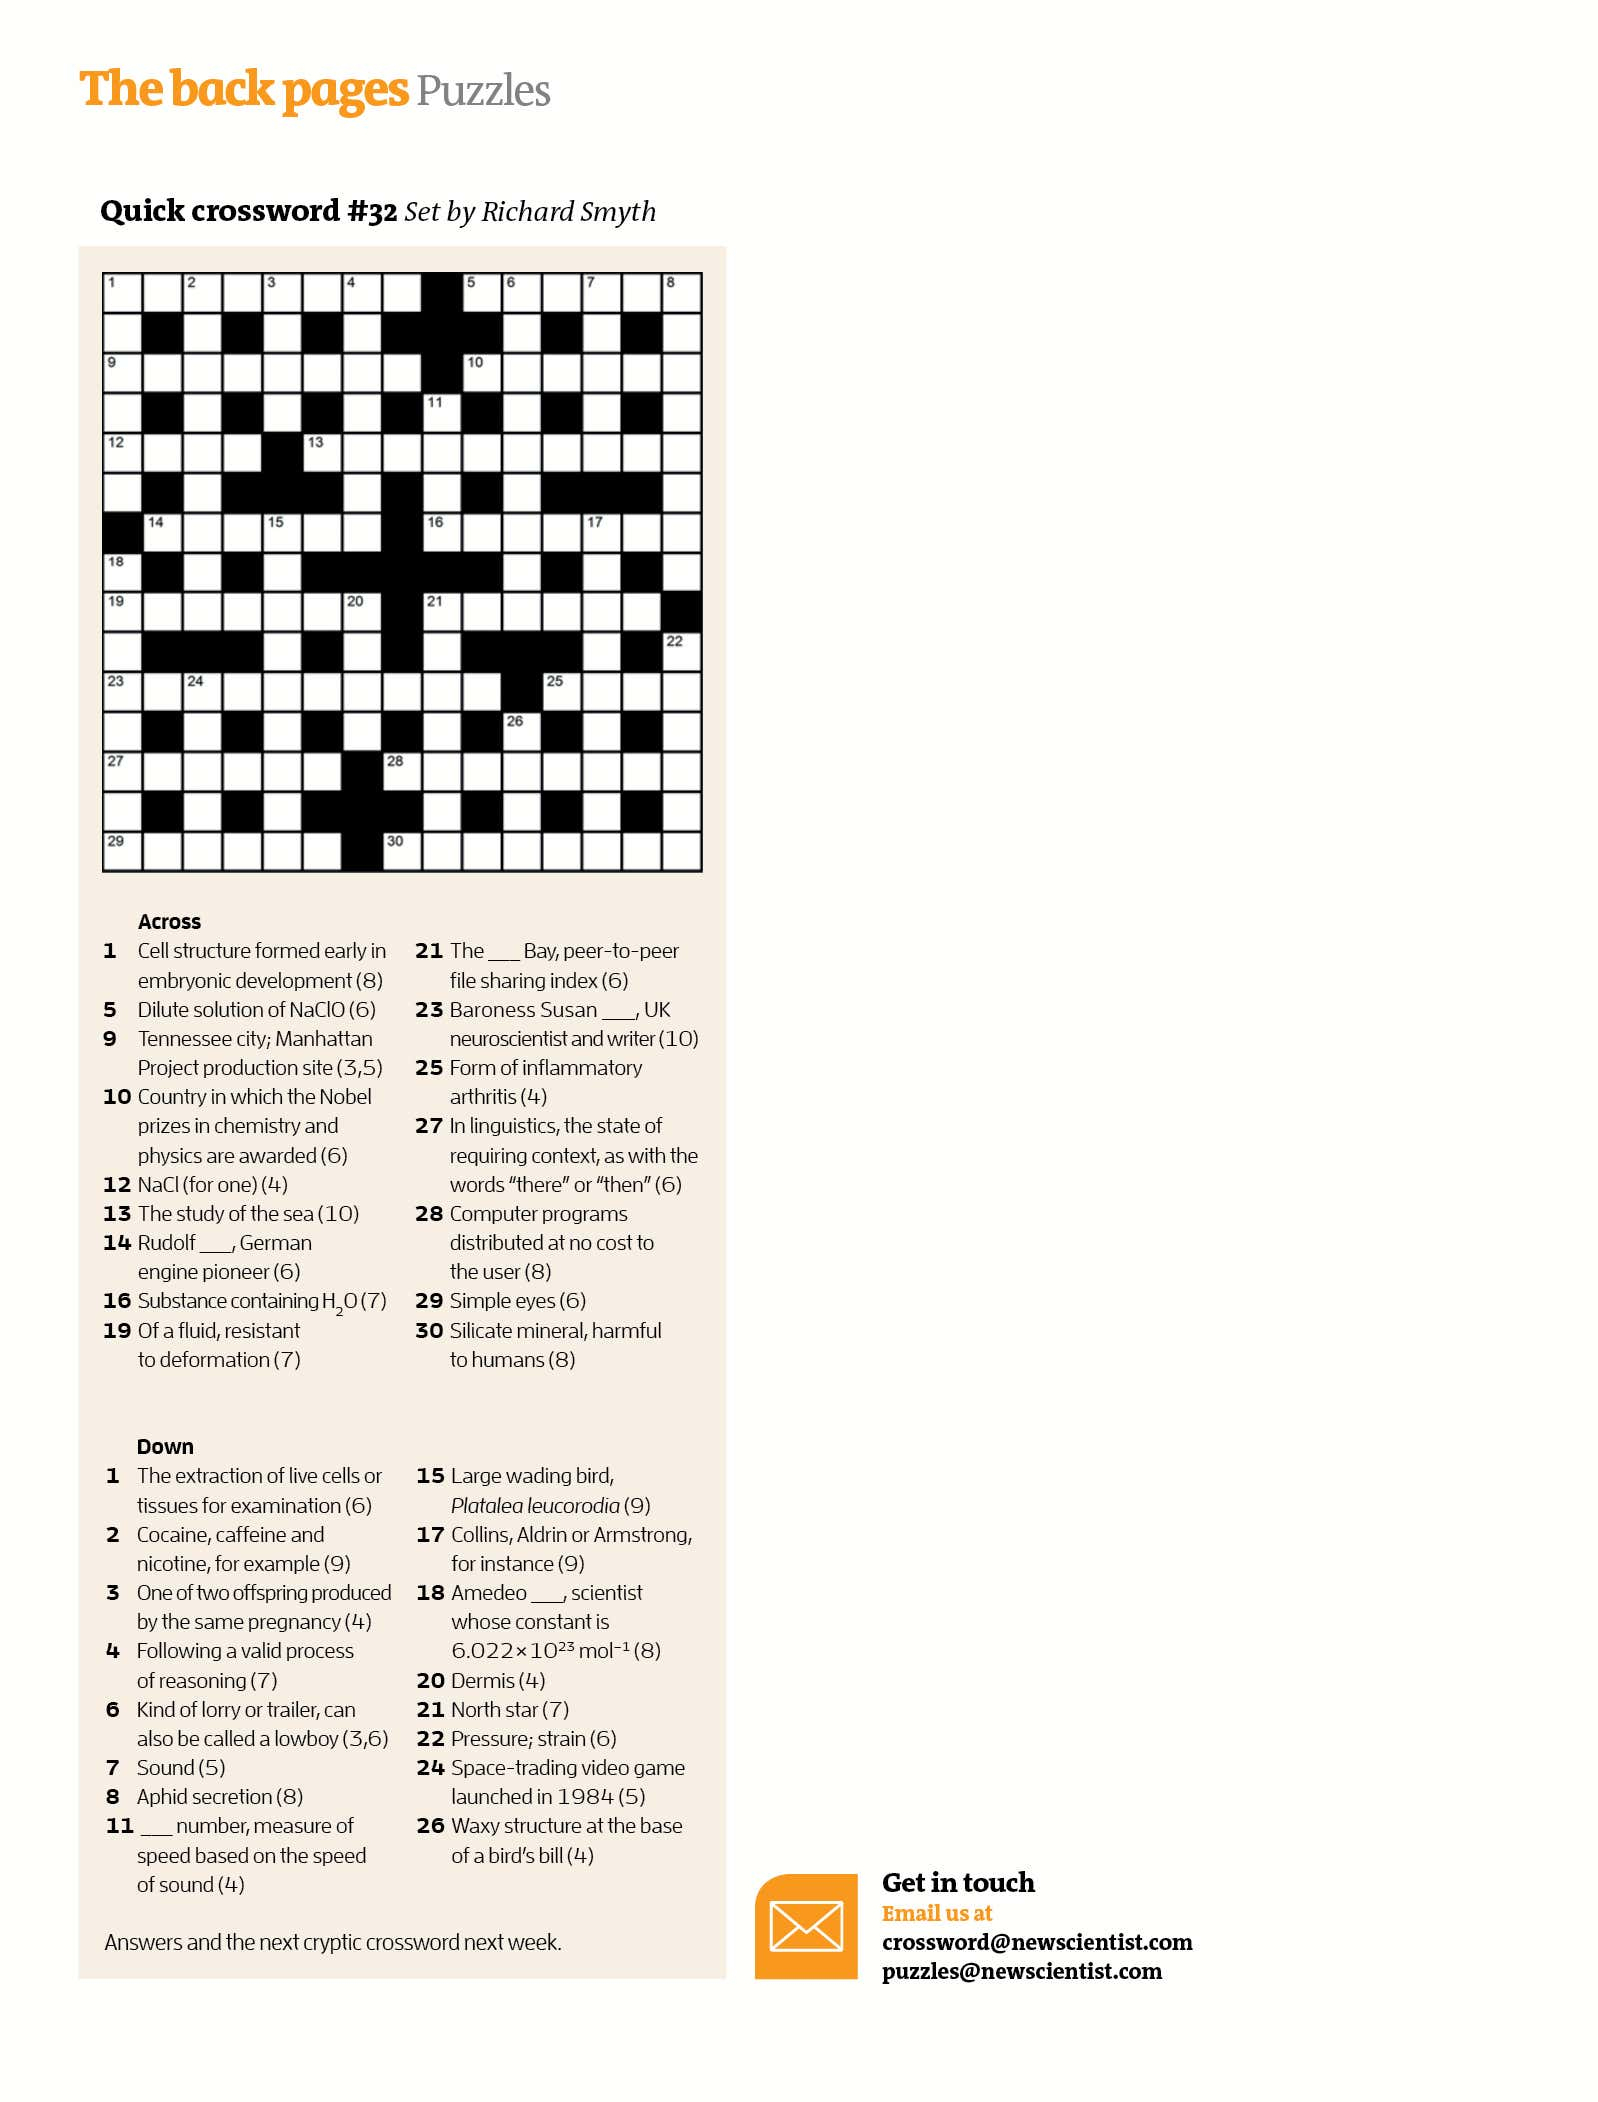 Quick Crossword #32 | New Scientist - Printable Quick Crossword